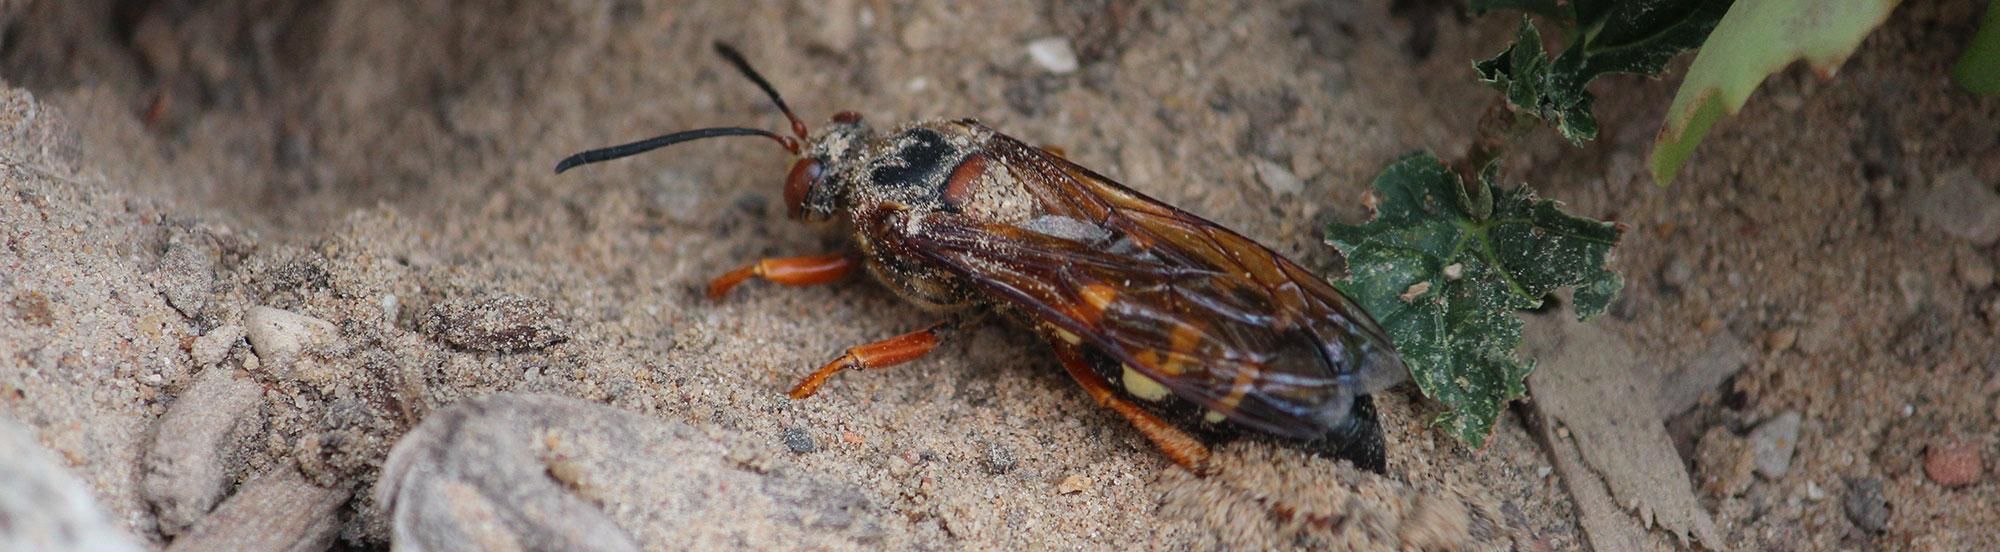 cicada killer wasp in dry soil